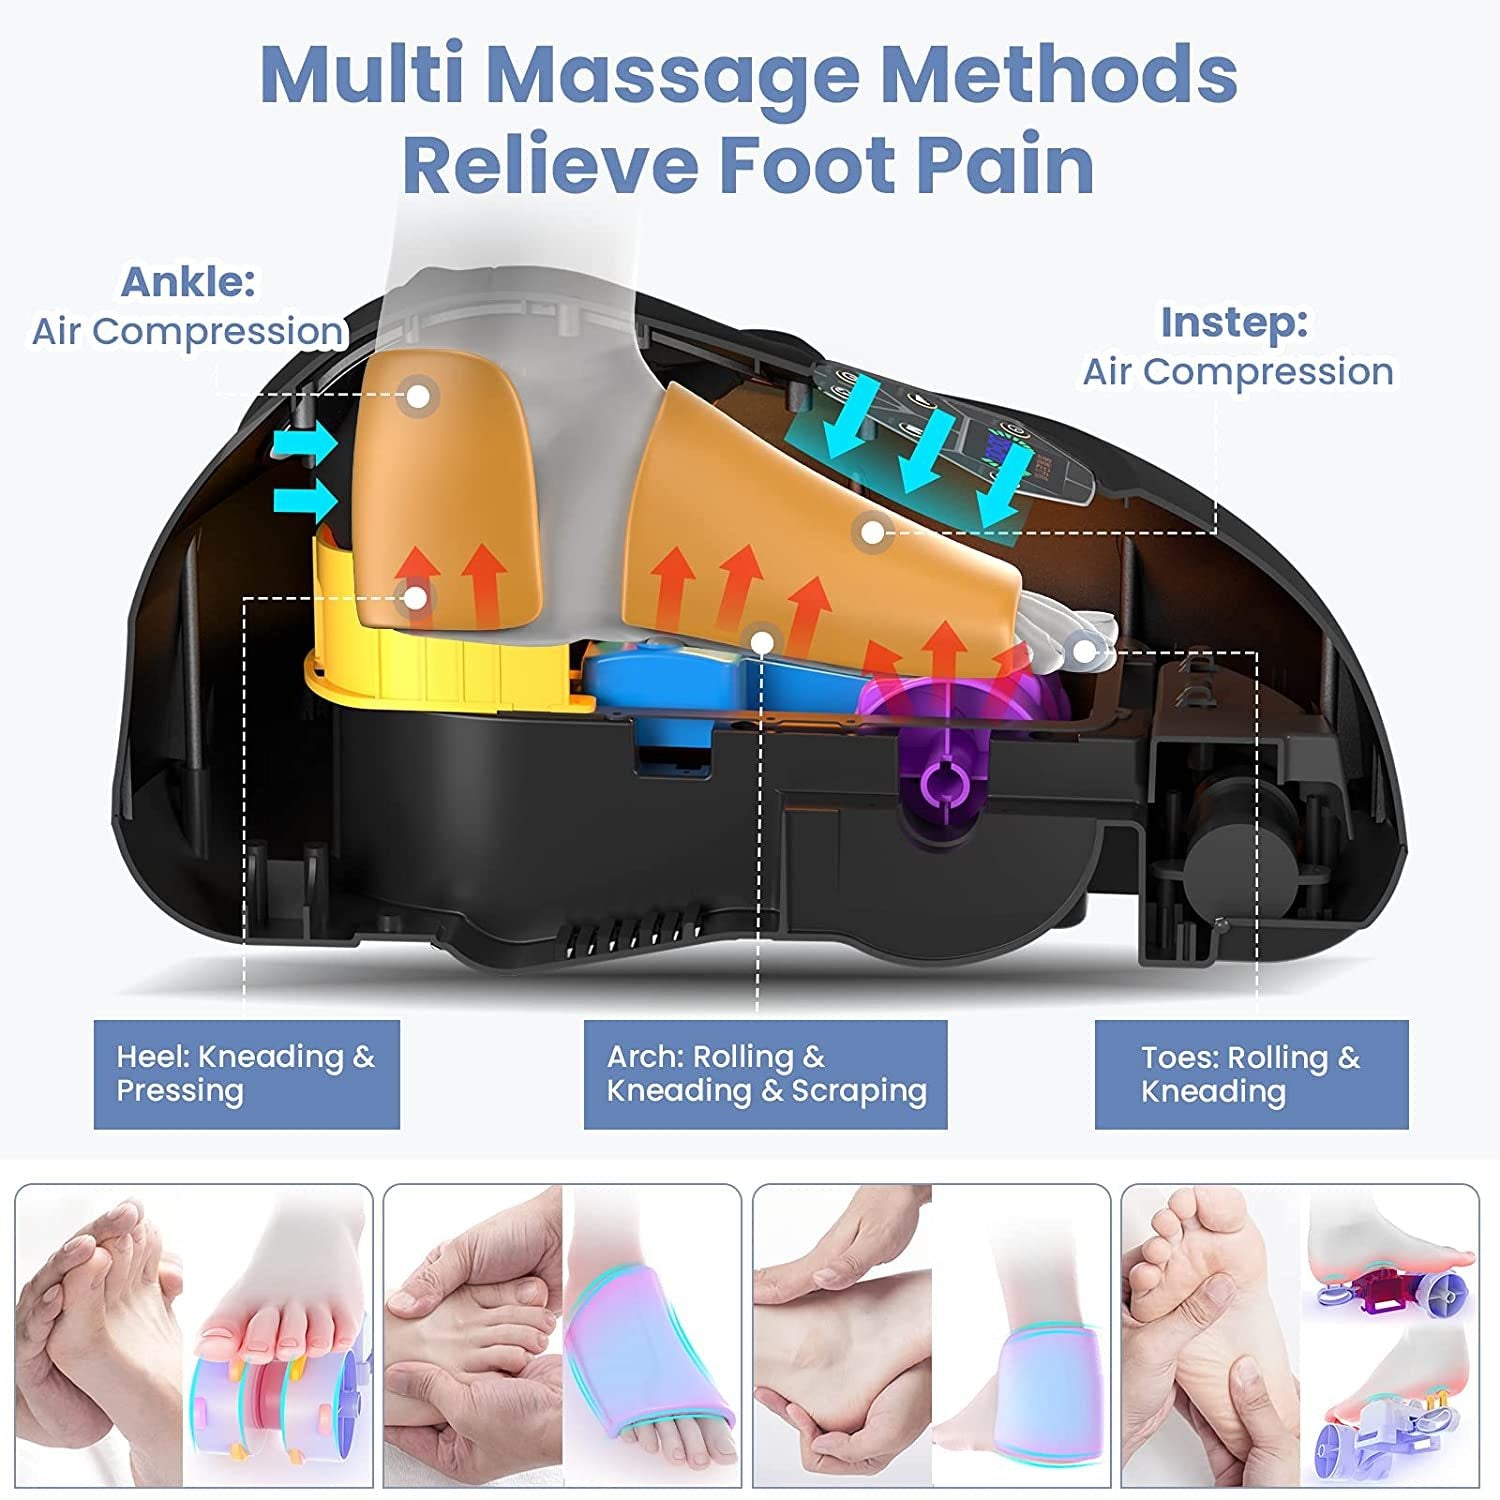 Image of multi massage methods relieve foot pain